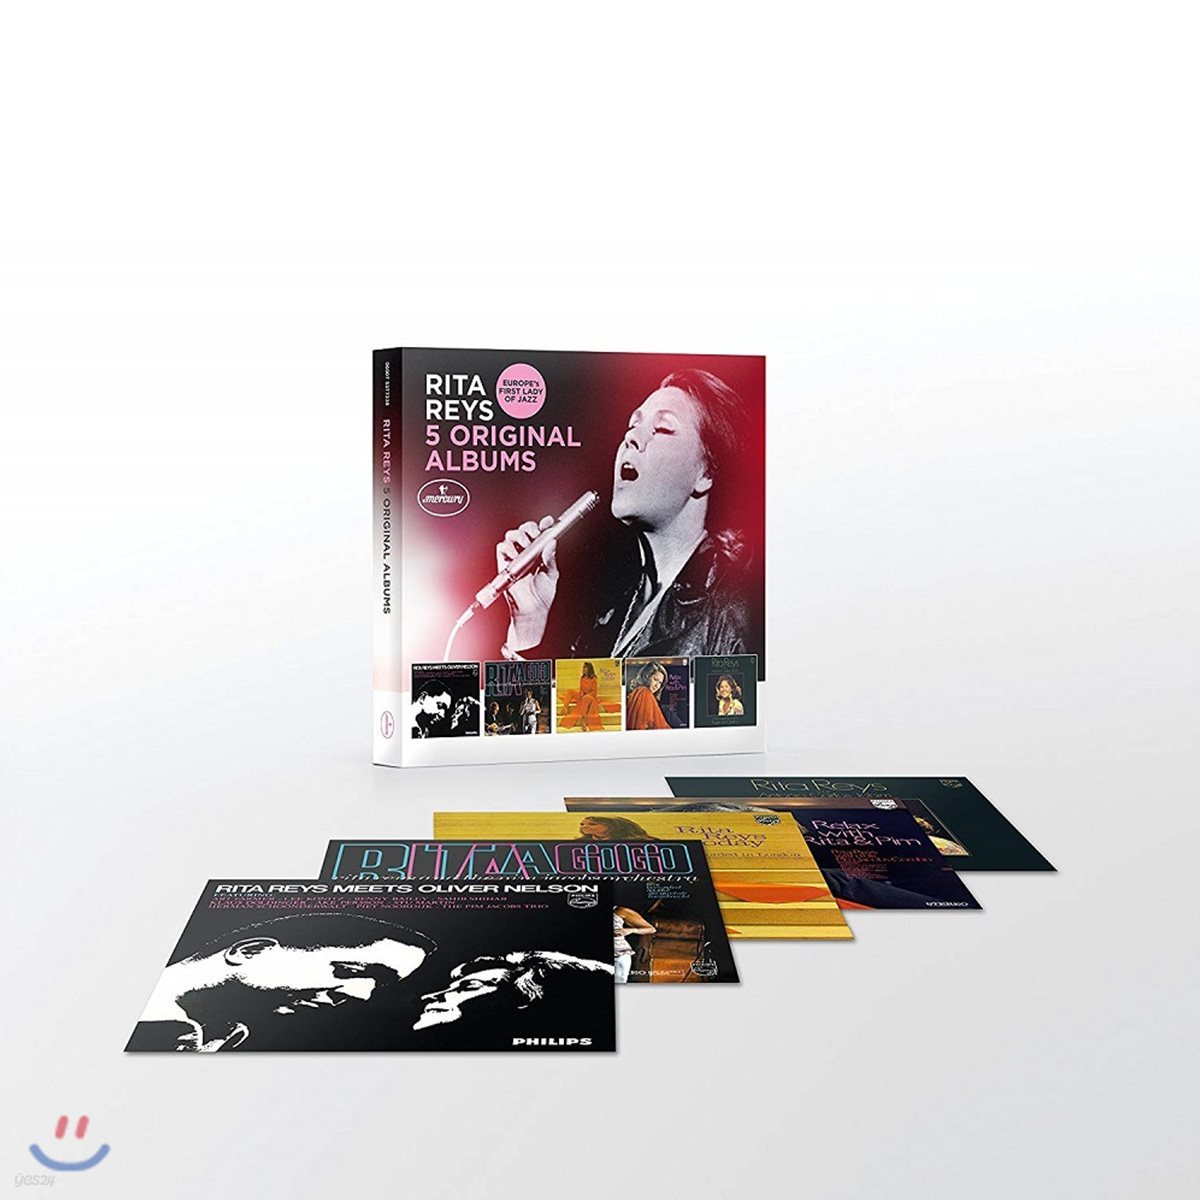 Rita Reys - 5 Original Albums 리타 라이스 오리지널 앨범 5CD 박스 세트